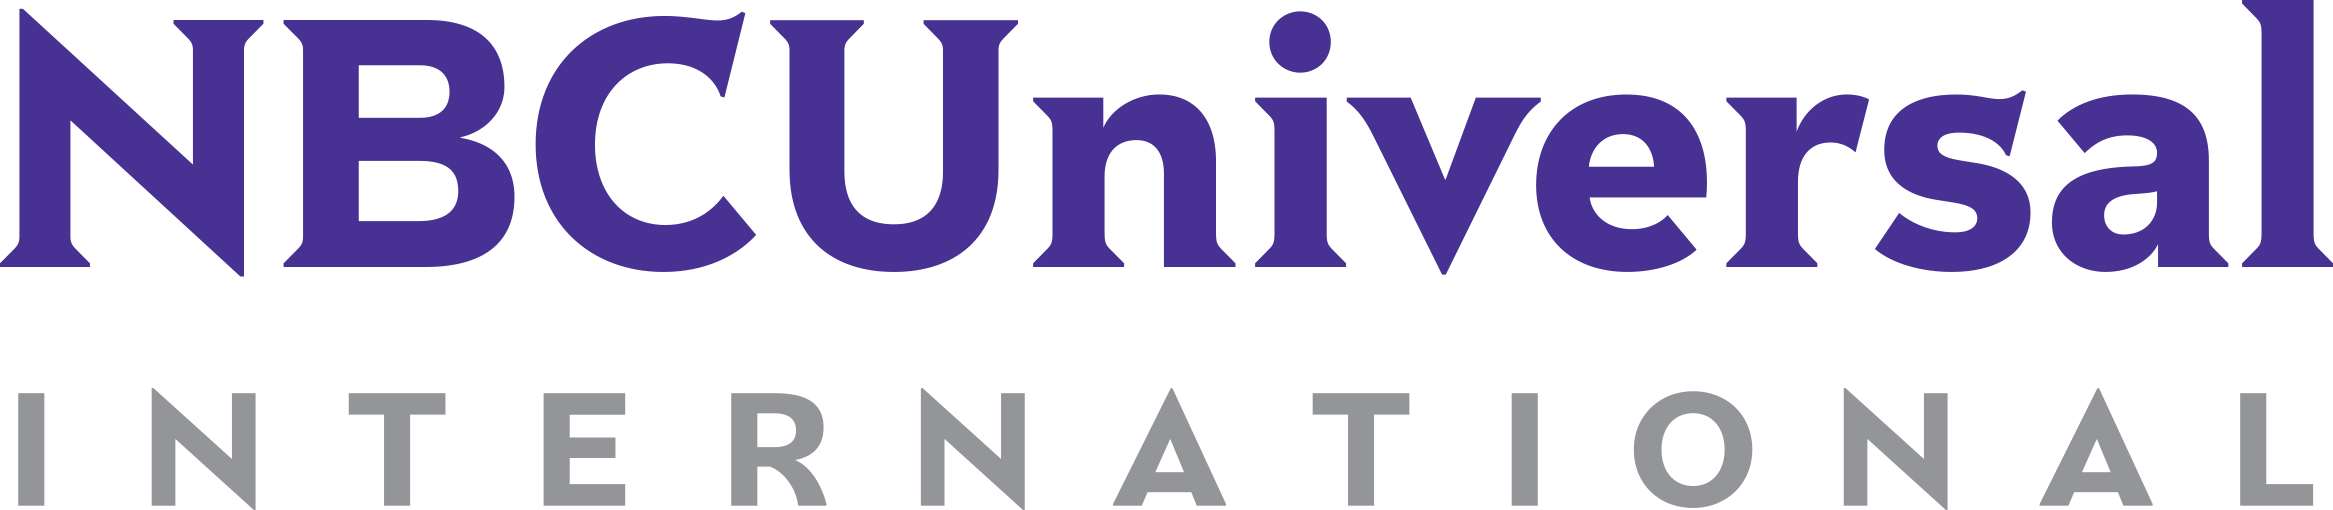 NBC Universal Logo - Home. NBCUniversal International Jobs and Careers